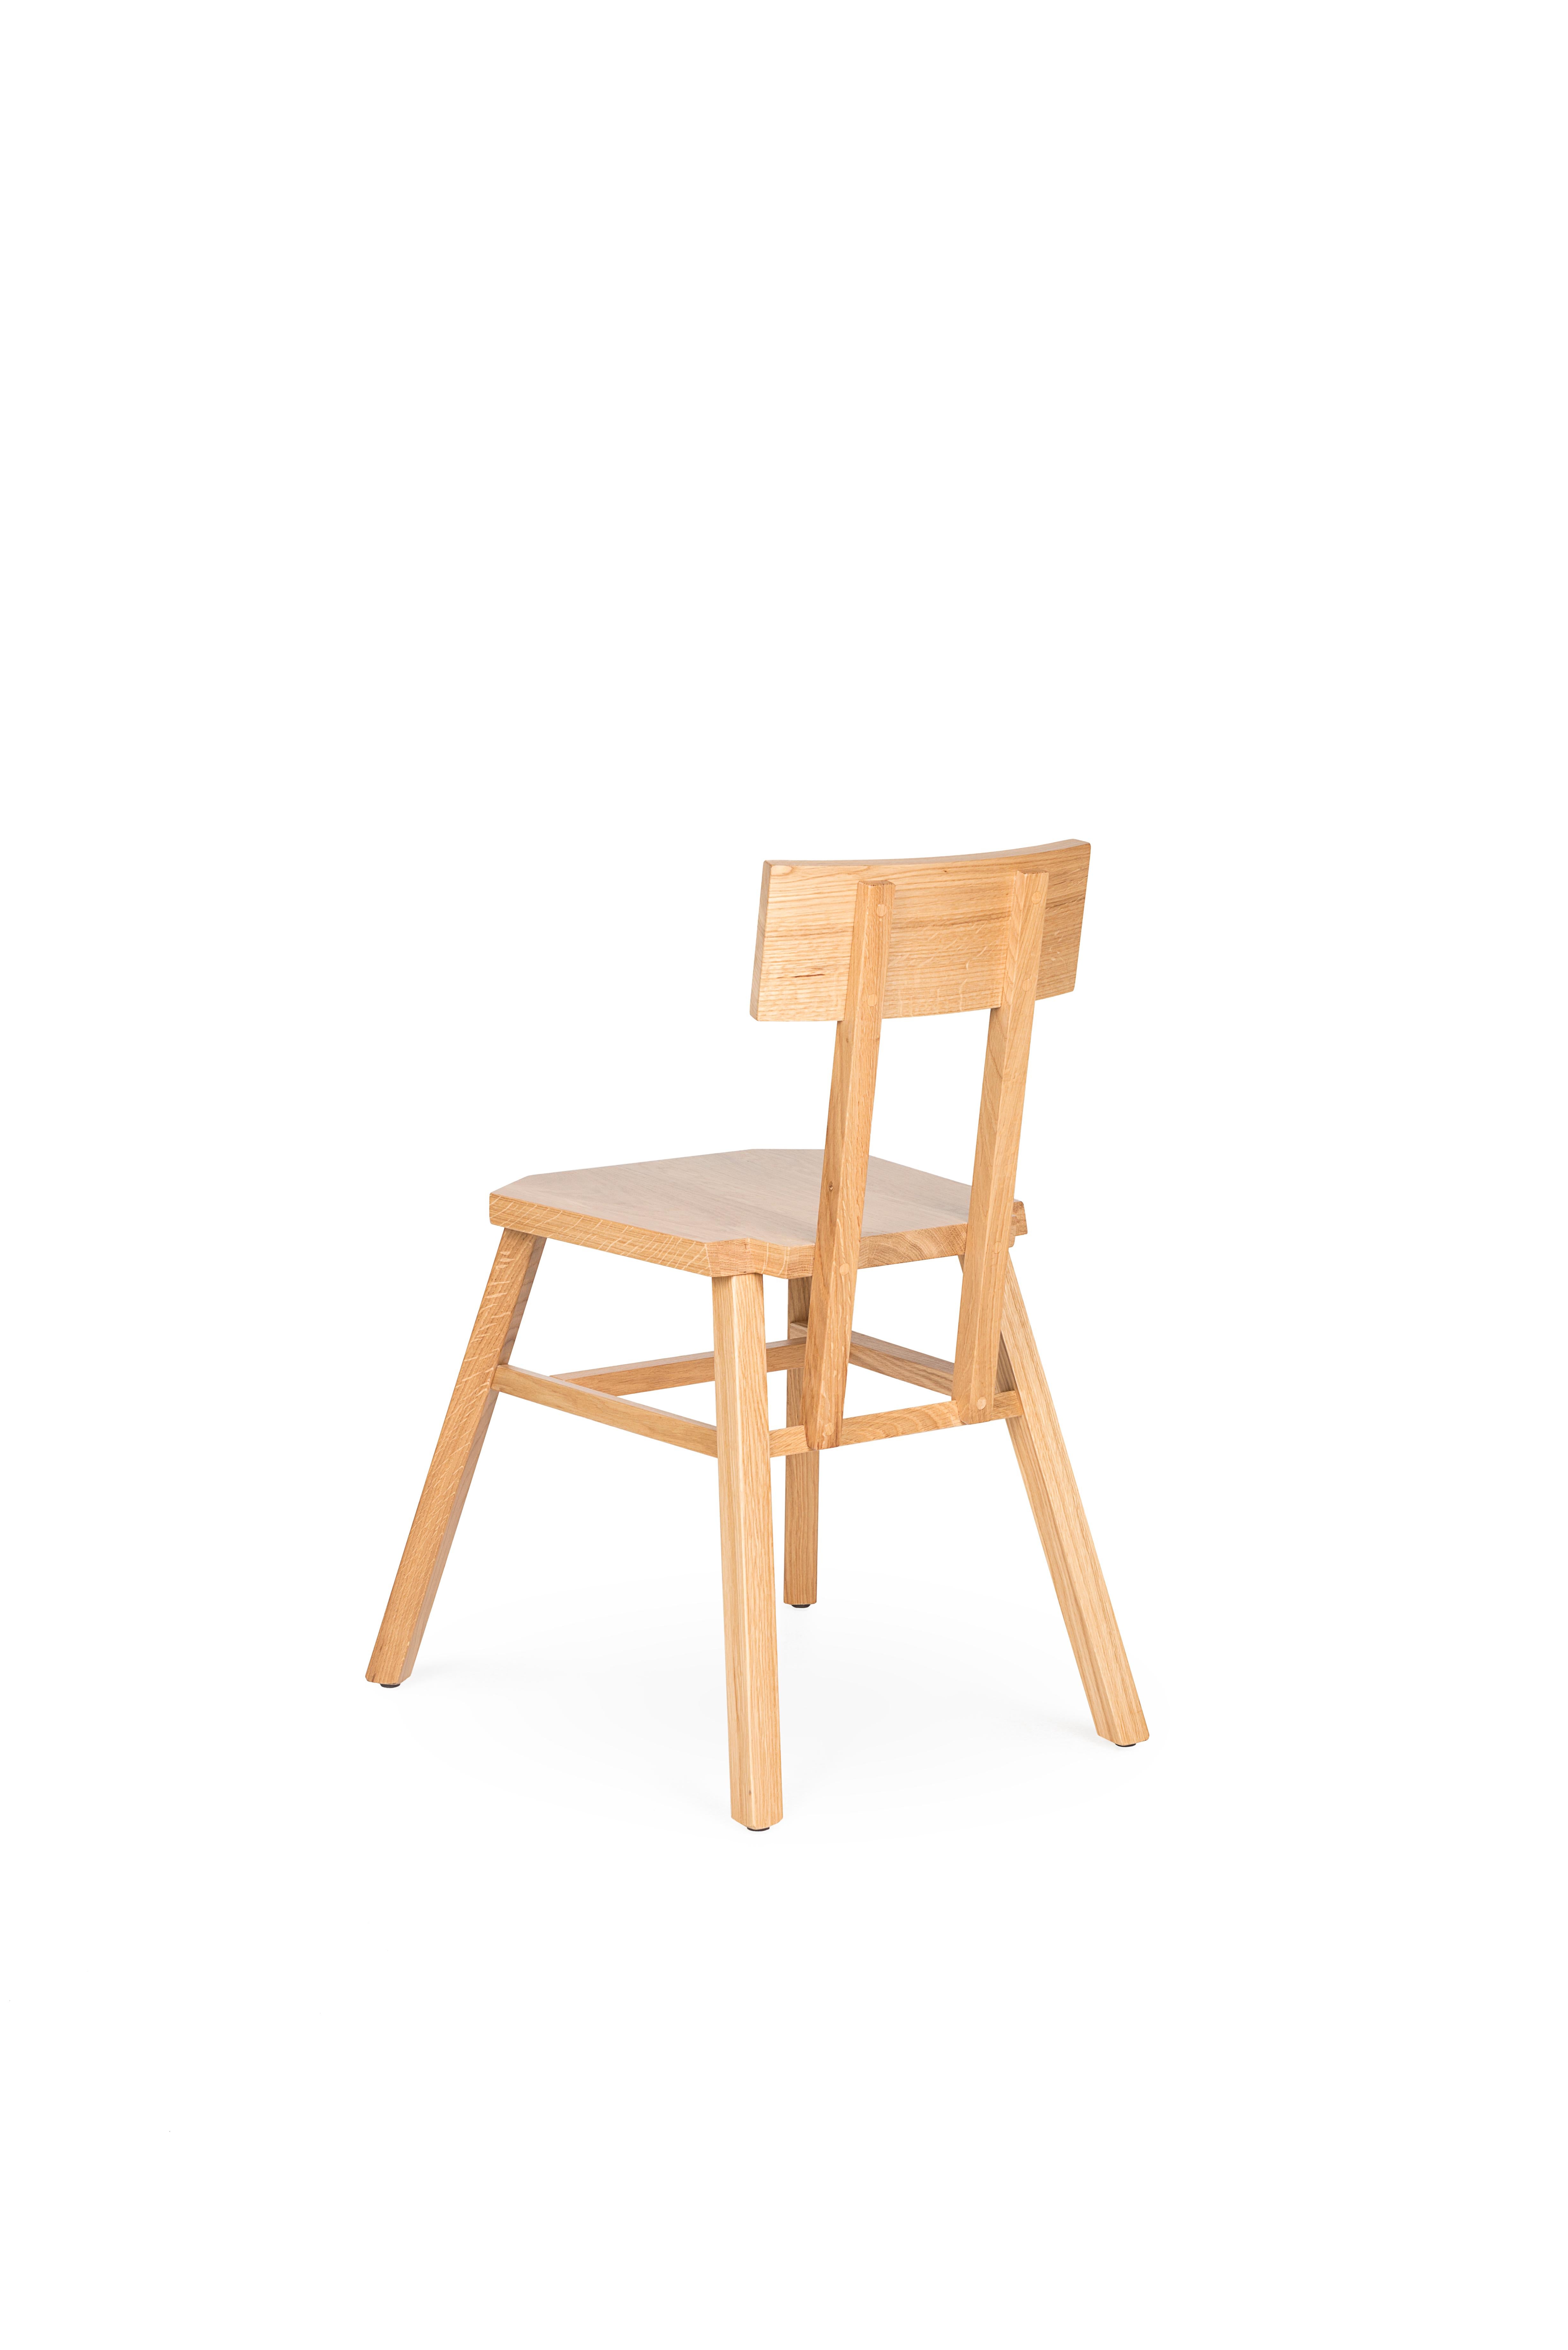 Dutch Lensvelt AVL Spider Chair For Sale